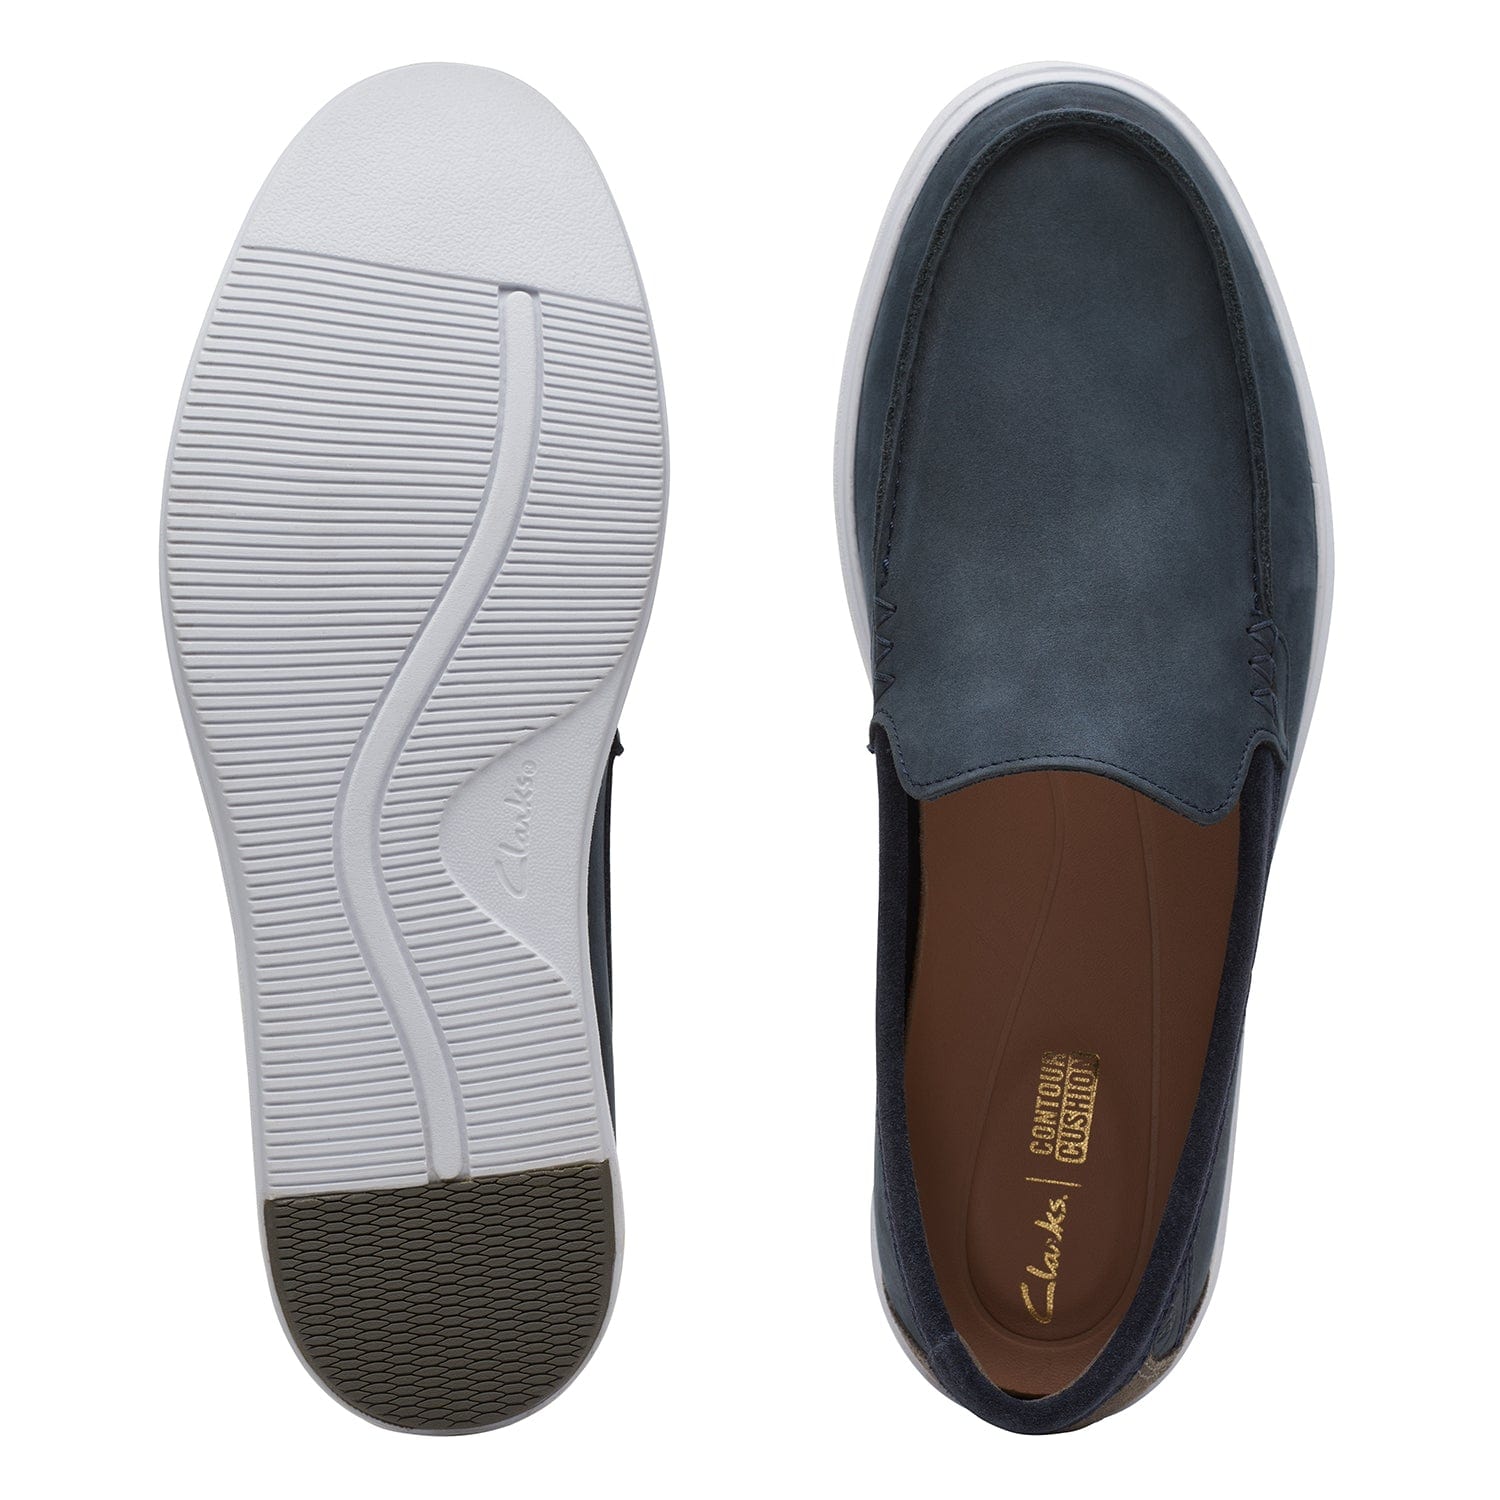 Clarks Bratton Loafer - Shoes - Navy Nubuck - 261724487 - G Width (Standard Fit)